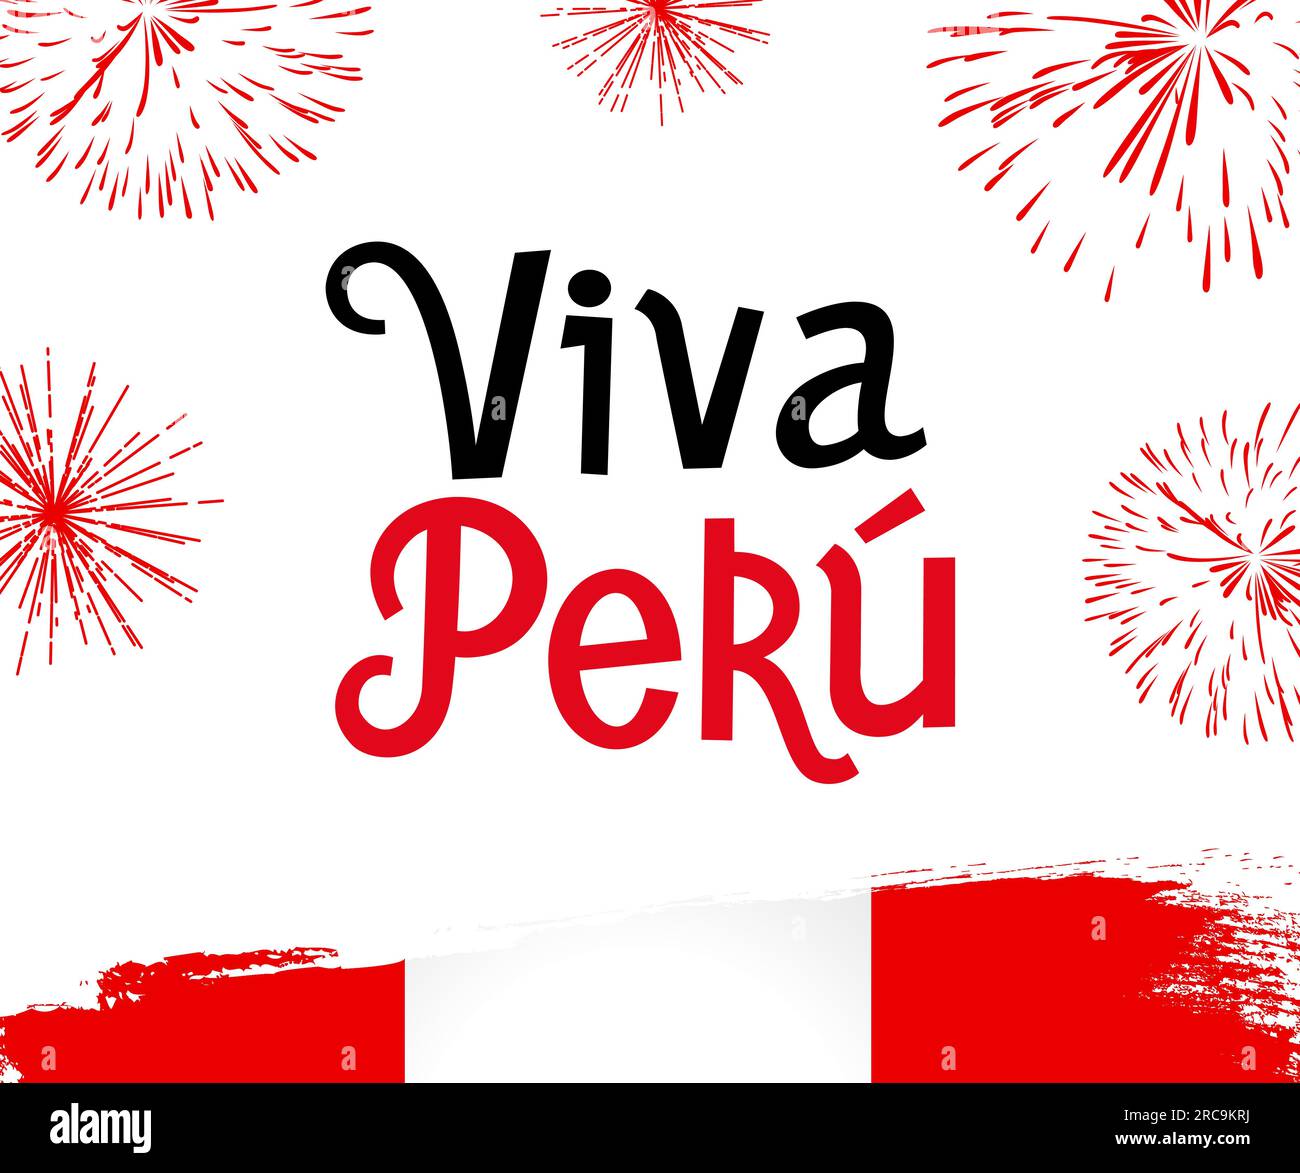 Viva Peru lettering. Translation from spanish - Long live Peru. Patriotic Peruvian flag and fireworks vector illustration Stock Vector